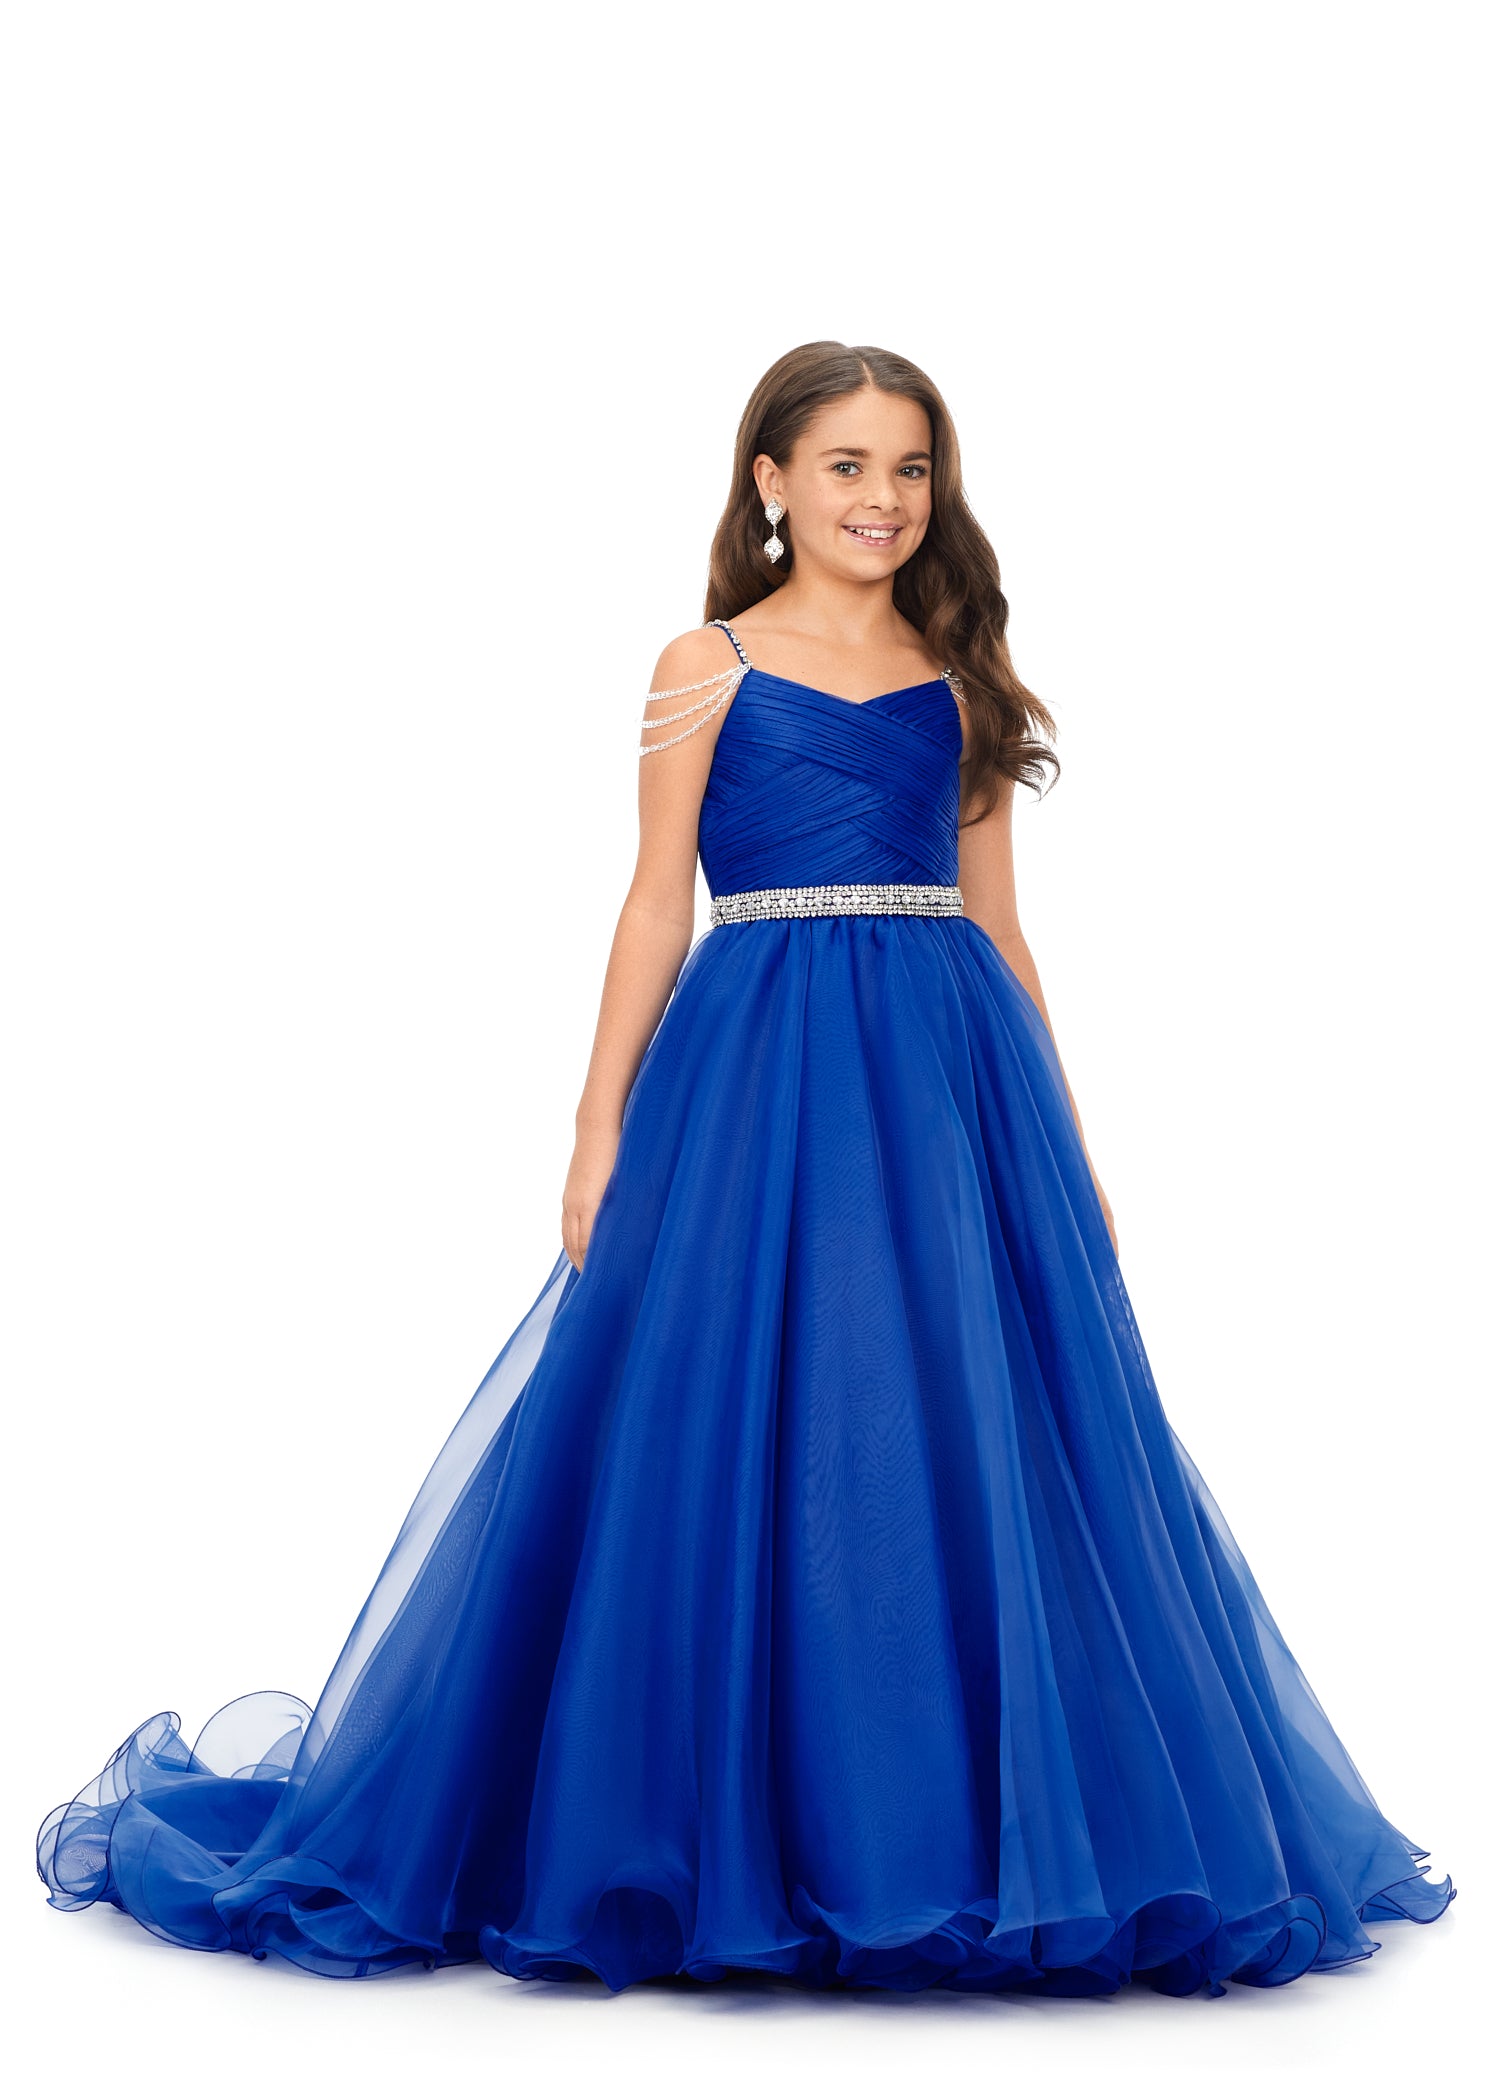 Royal Blue Girl Dress,Girl Dress, Royal Blue Dress, Royal Blue